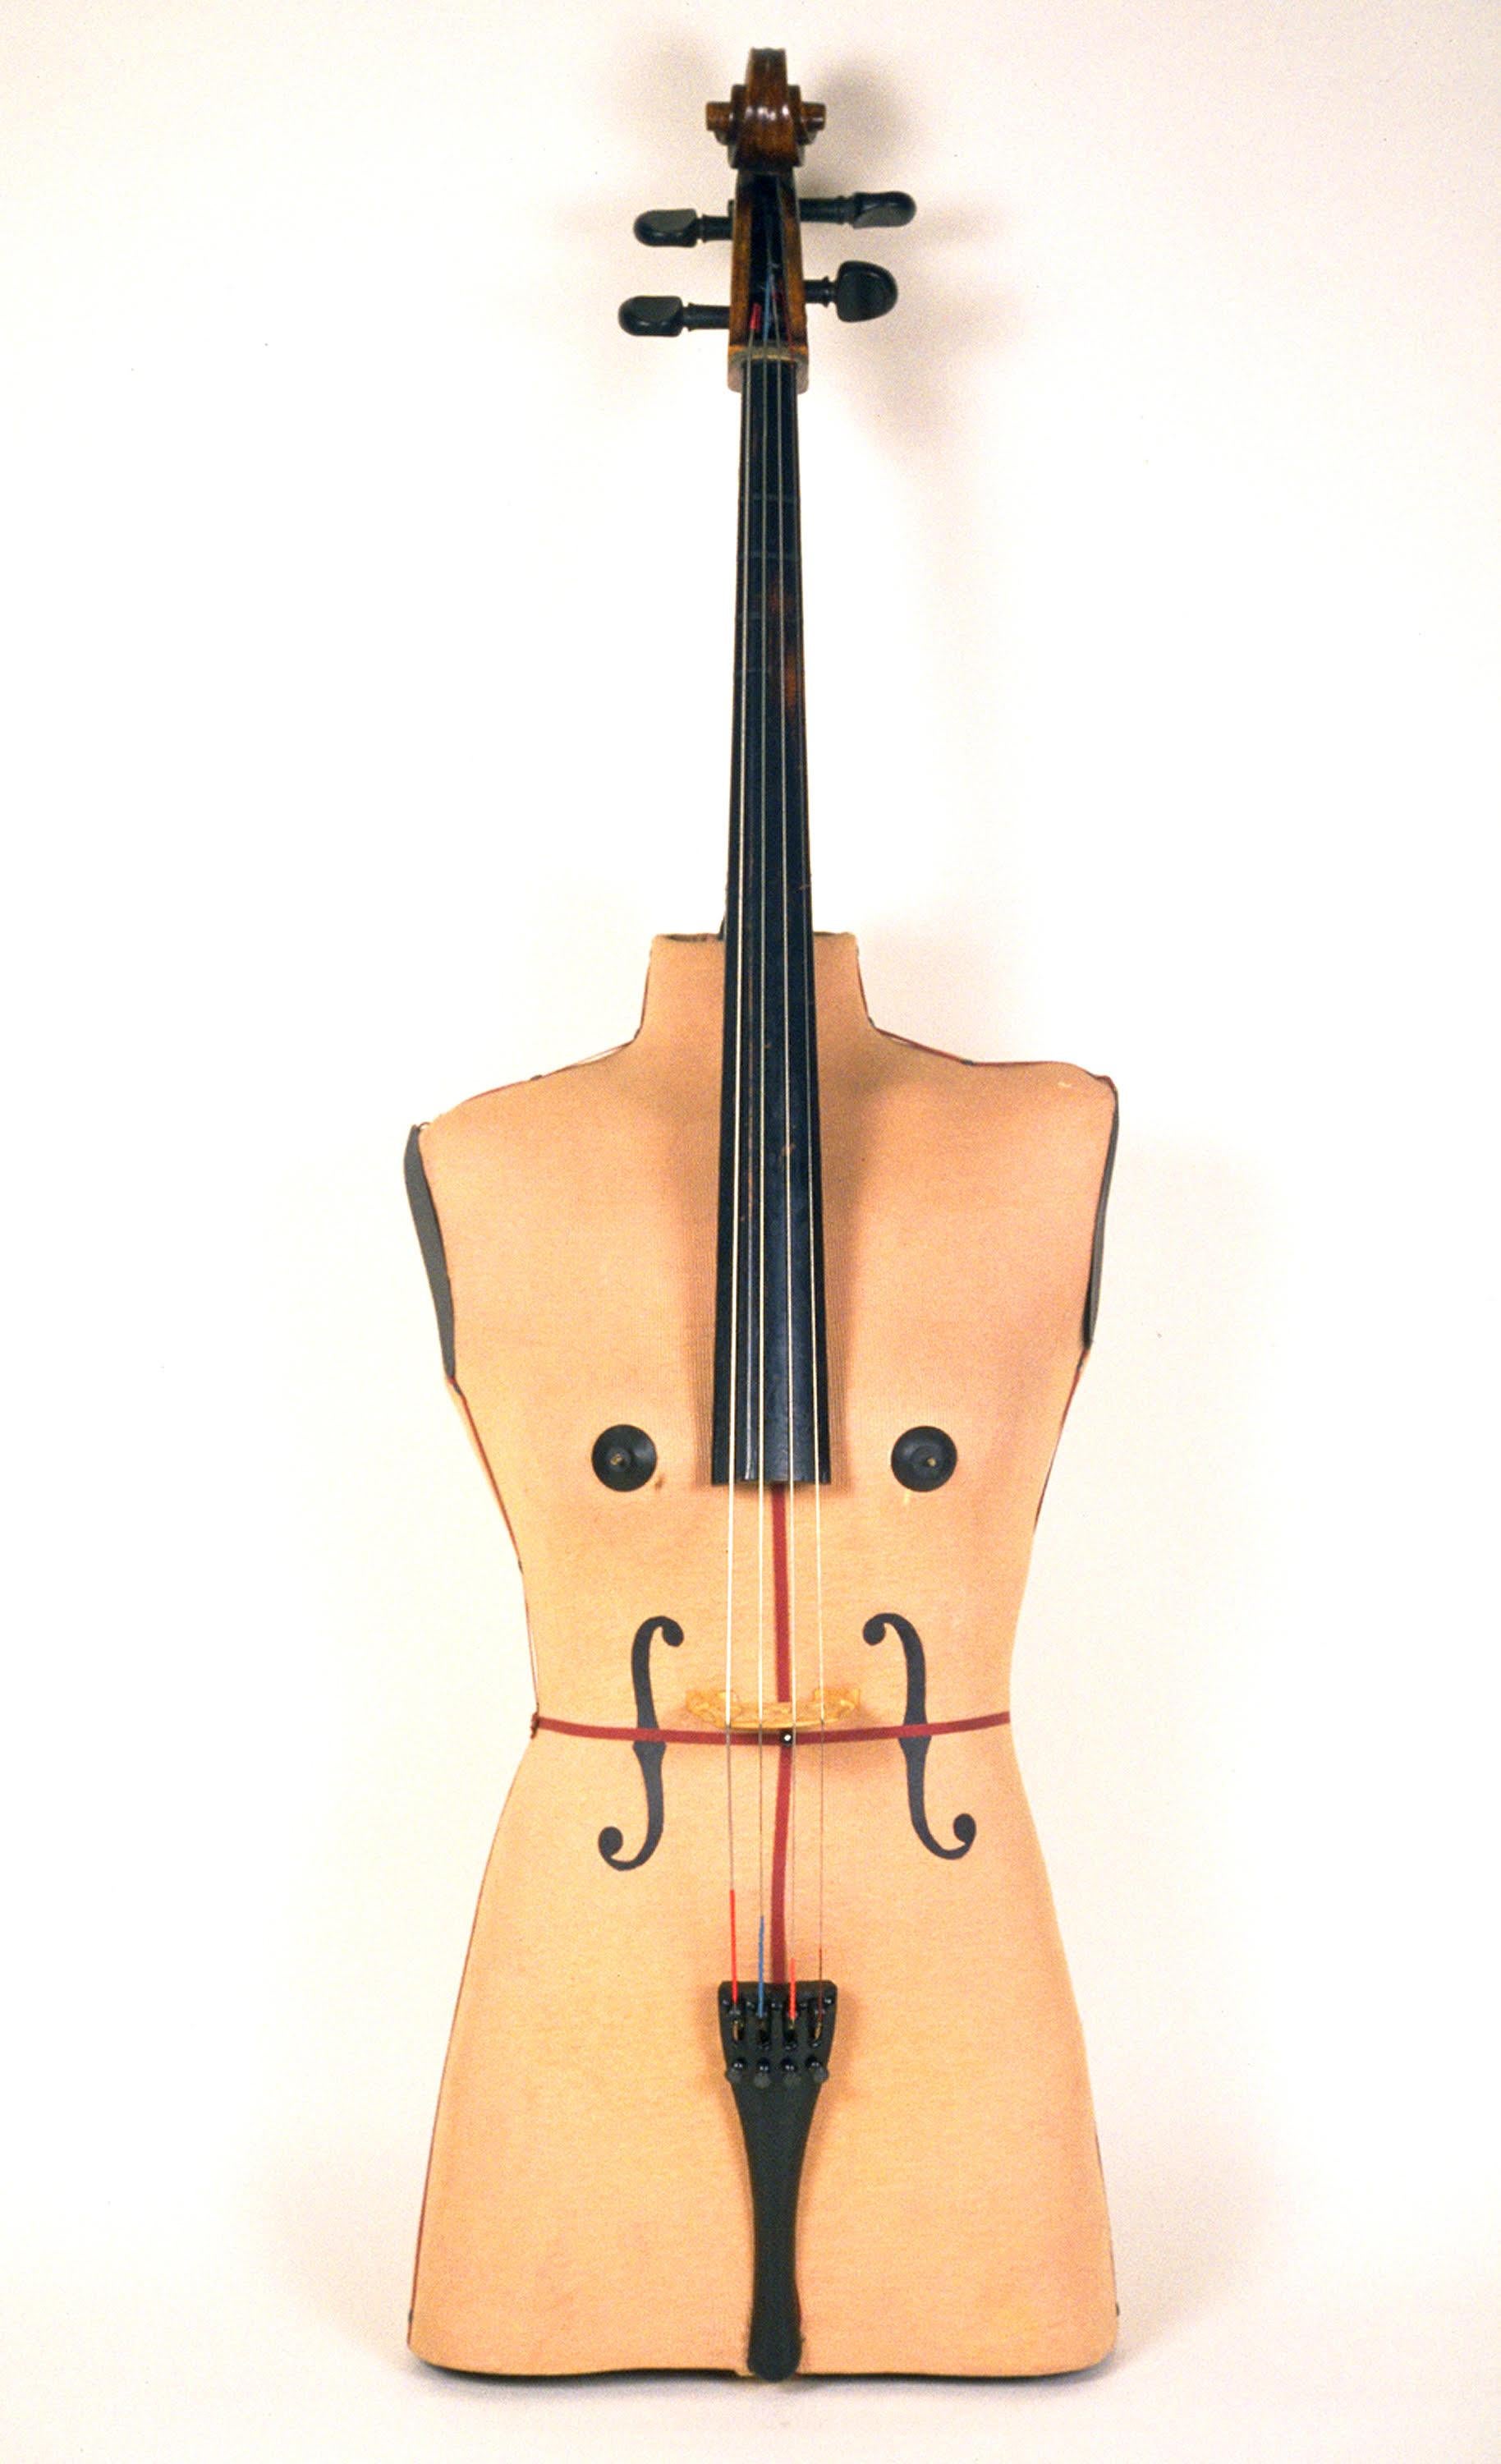 Sculpture d'instruments de musique hybrides Torso Cello, assemblage - Mixed Media Art de Ken Butler